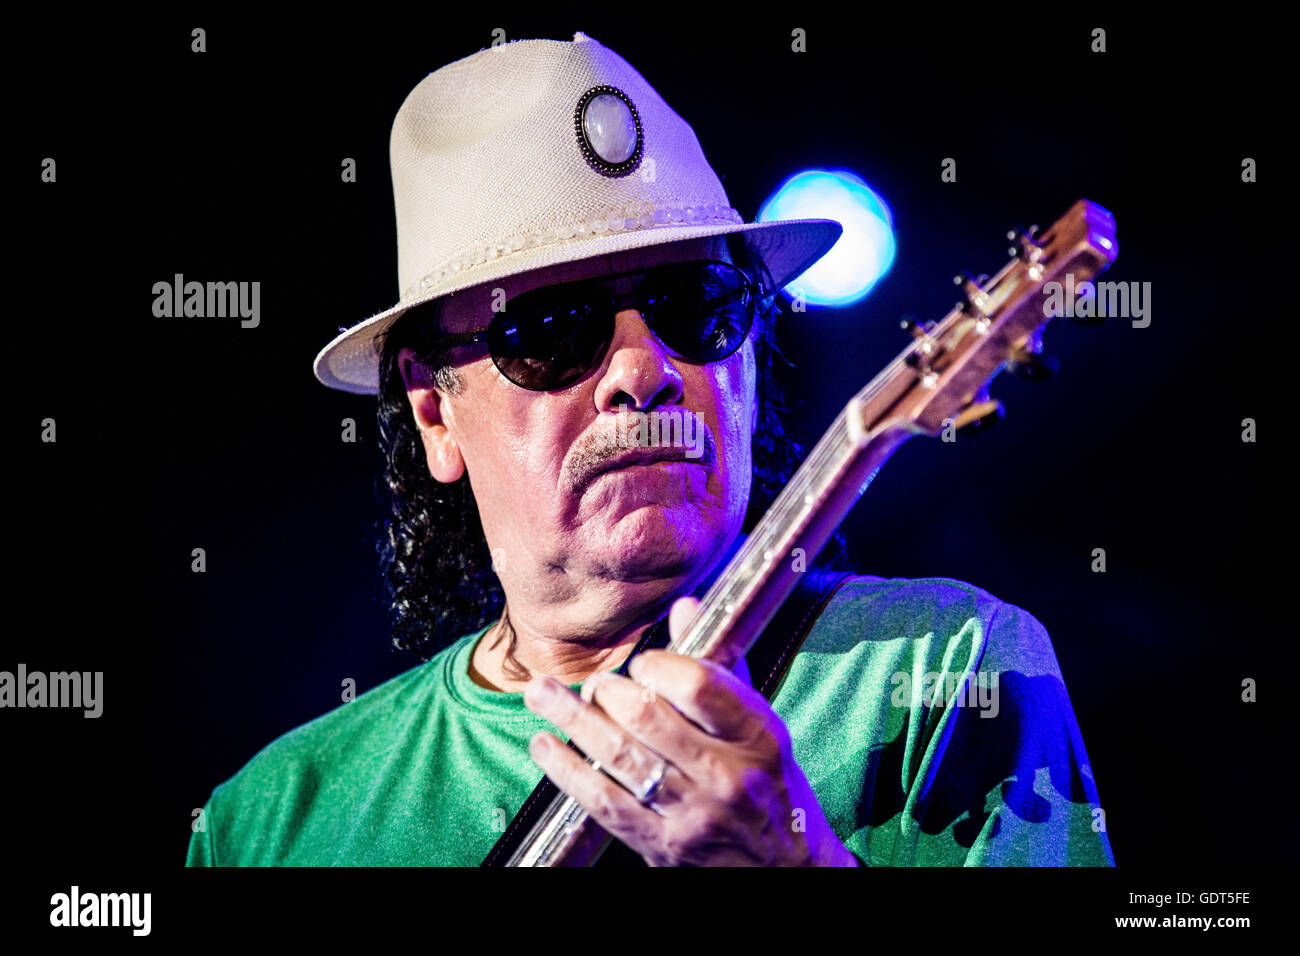 Carlos santana, guitar hi-res stock photography and images - Page 3 - Alamy